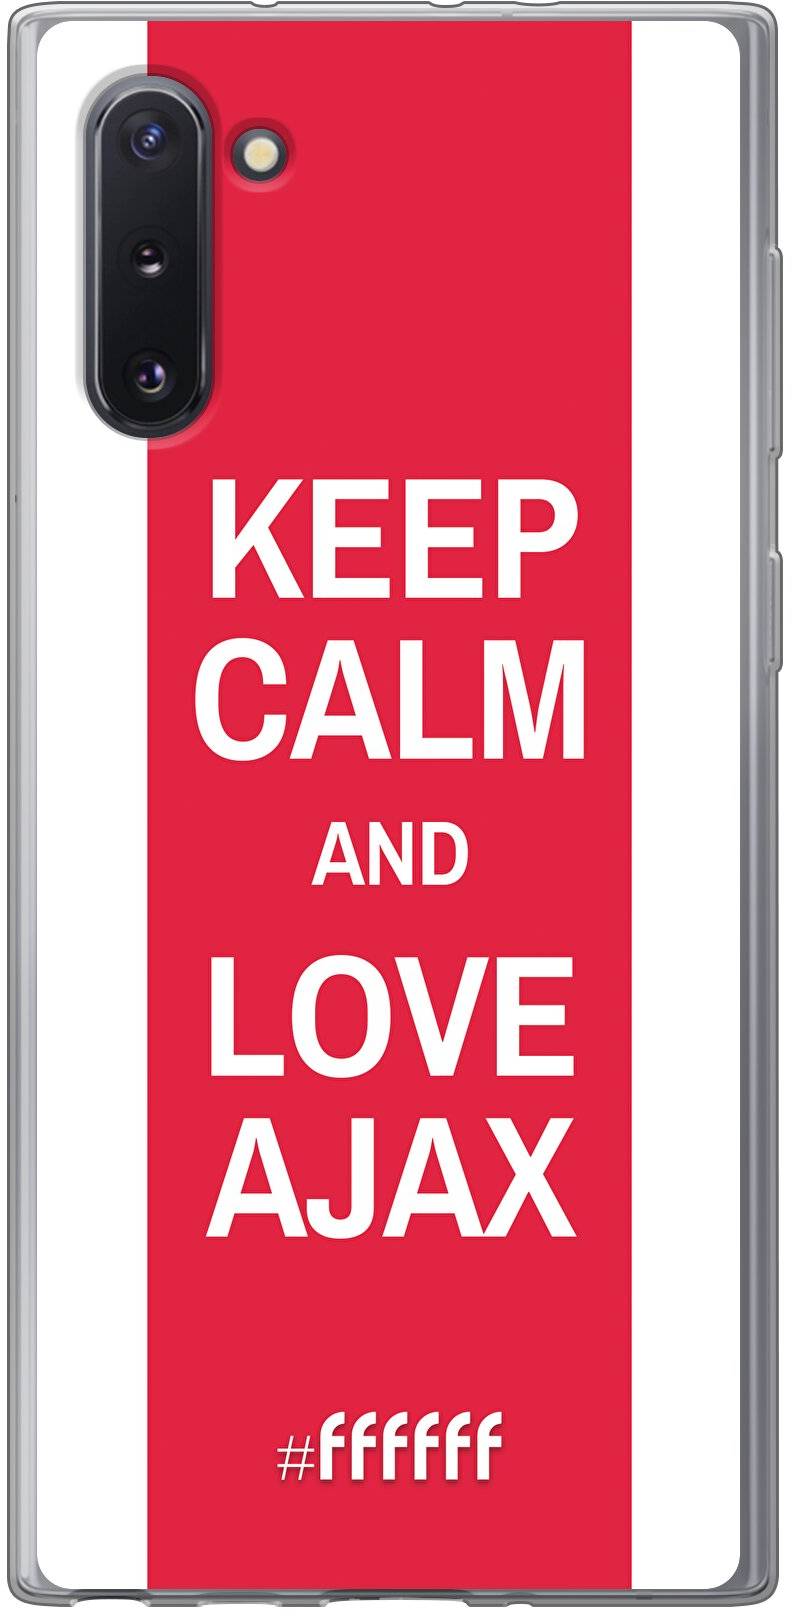 AFC Ajax Keep Calm Galaxy Note 10